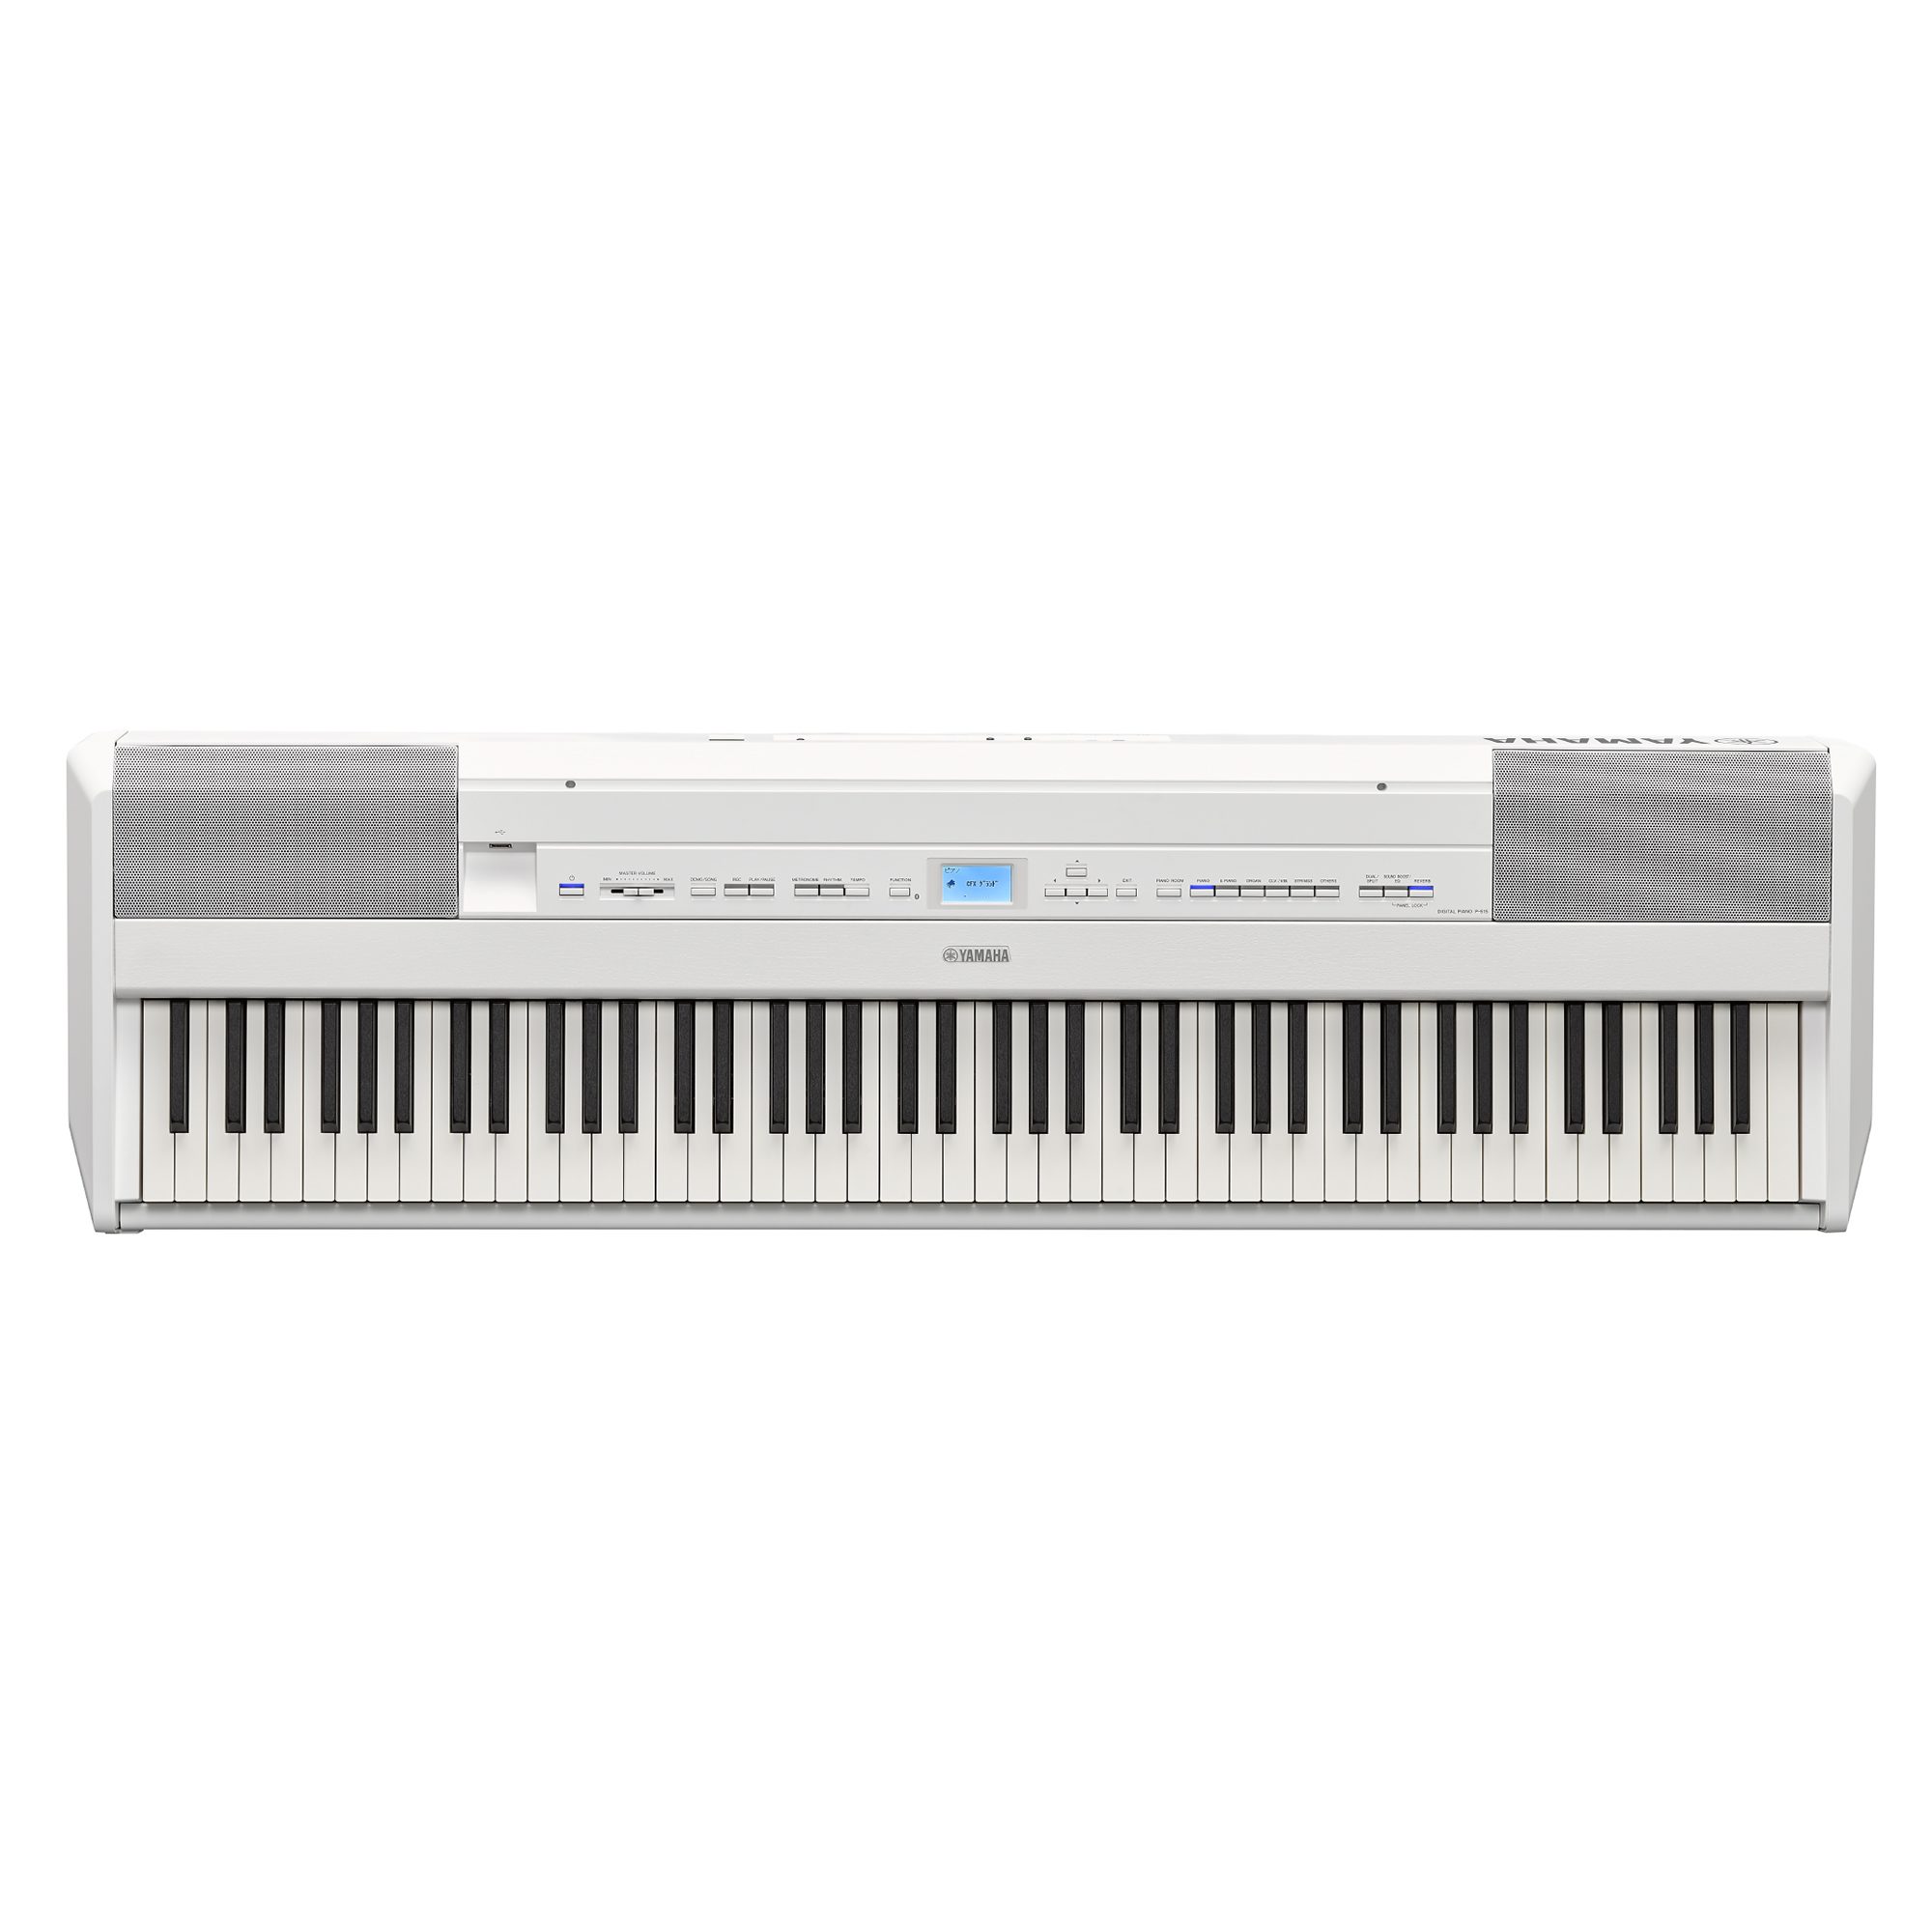 Yamaha P-515 - white Portable digital piano